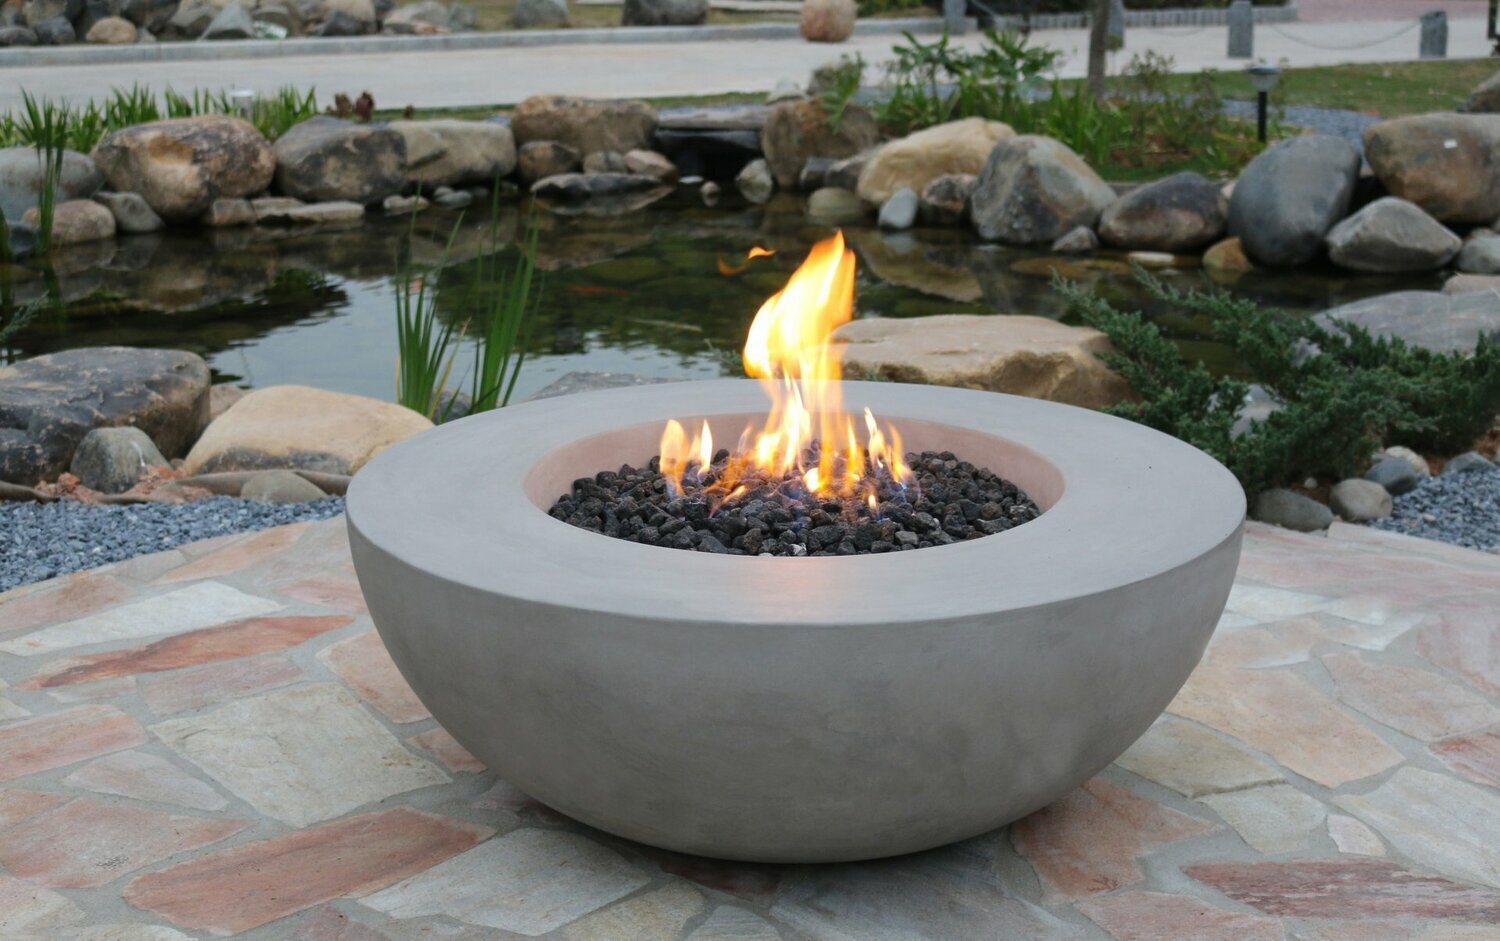 Lunar Bowl Fire Table